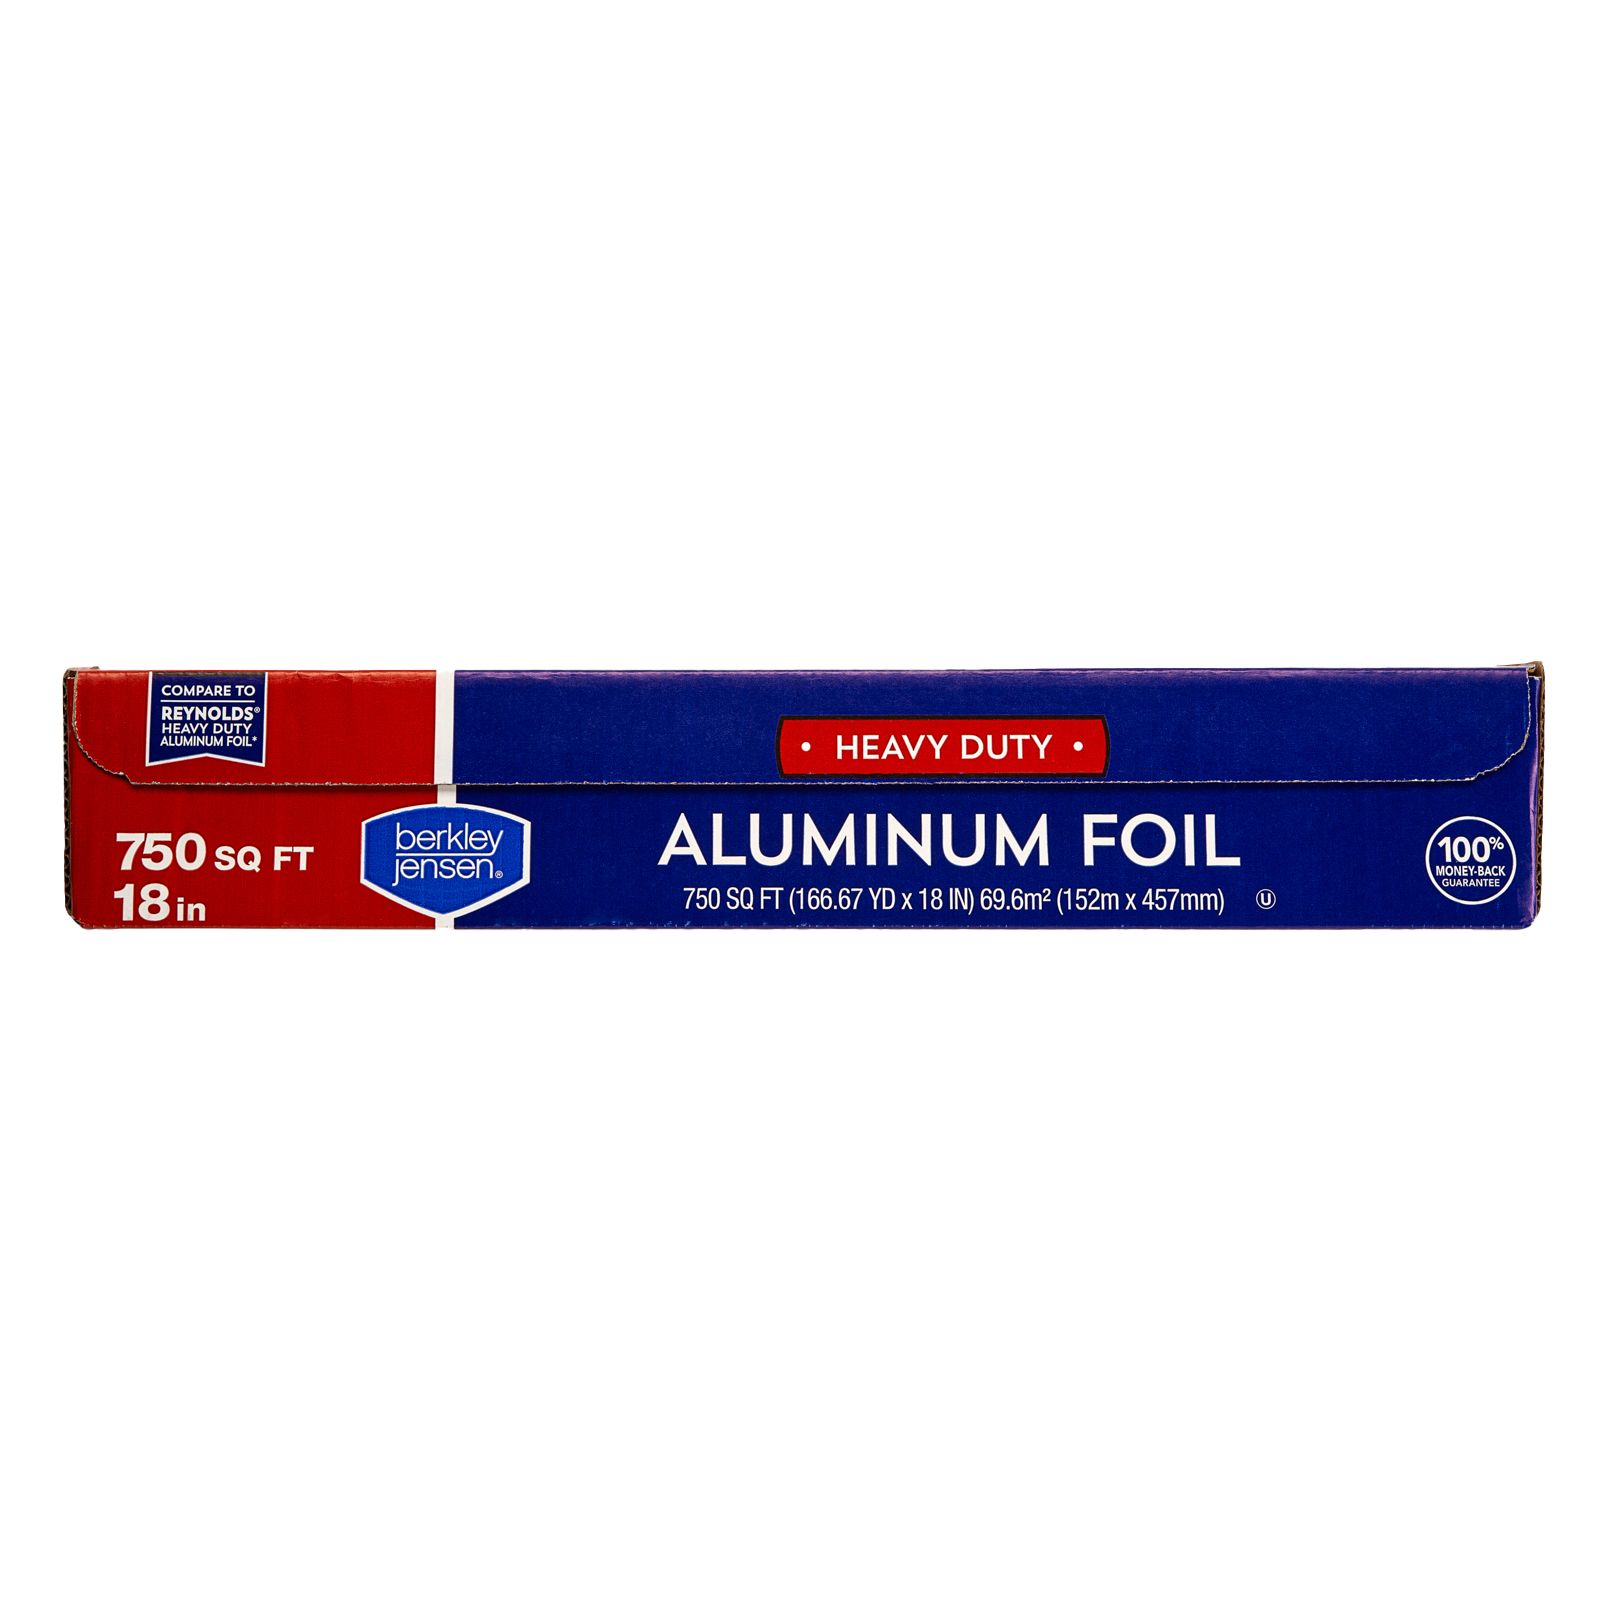 Reynolds Wrap Heavy Duty Aluminum Foil, 18 x 33.33 yd, 2-count